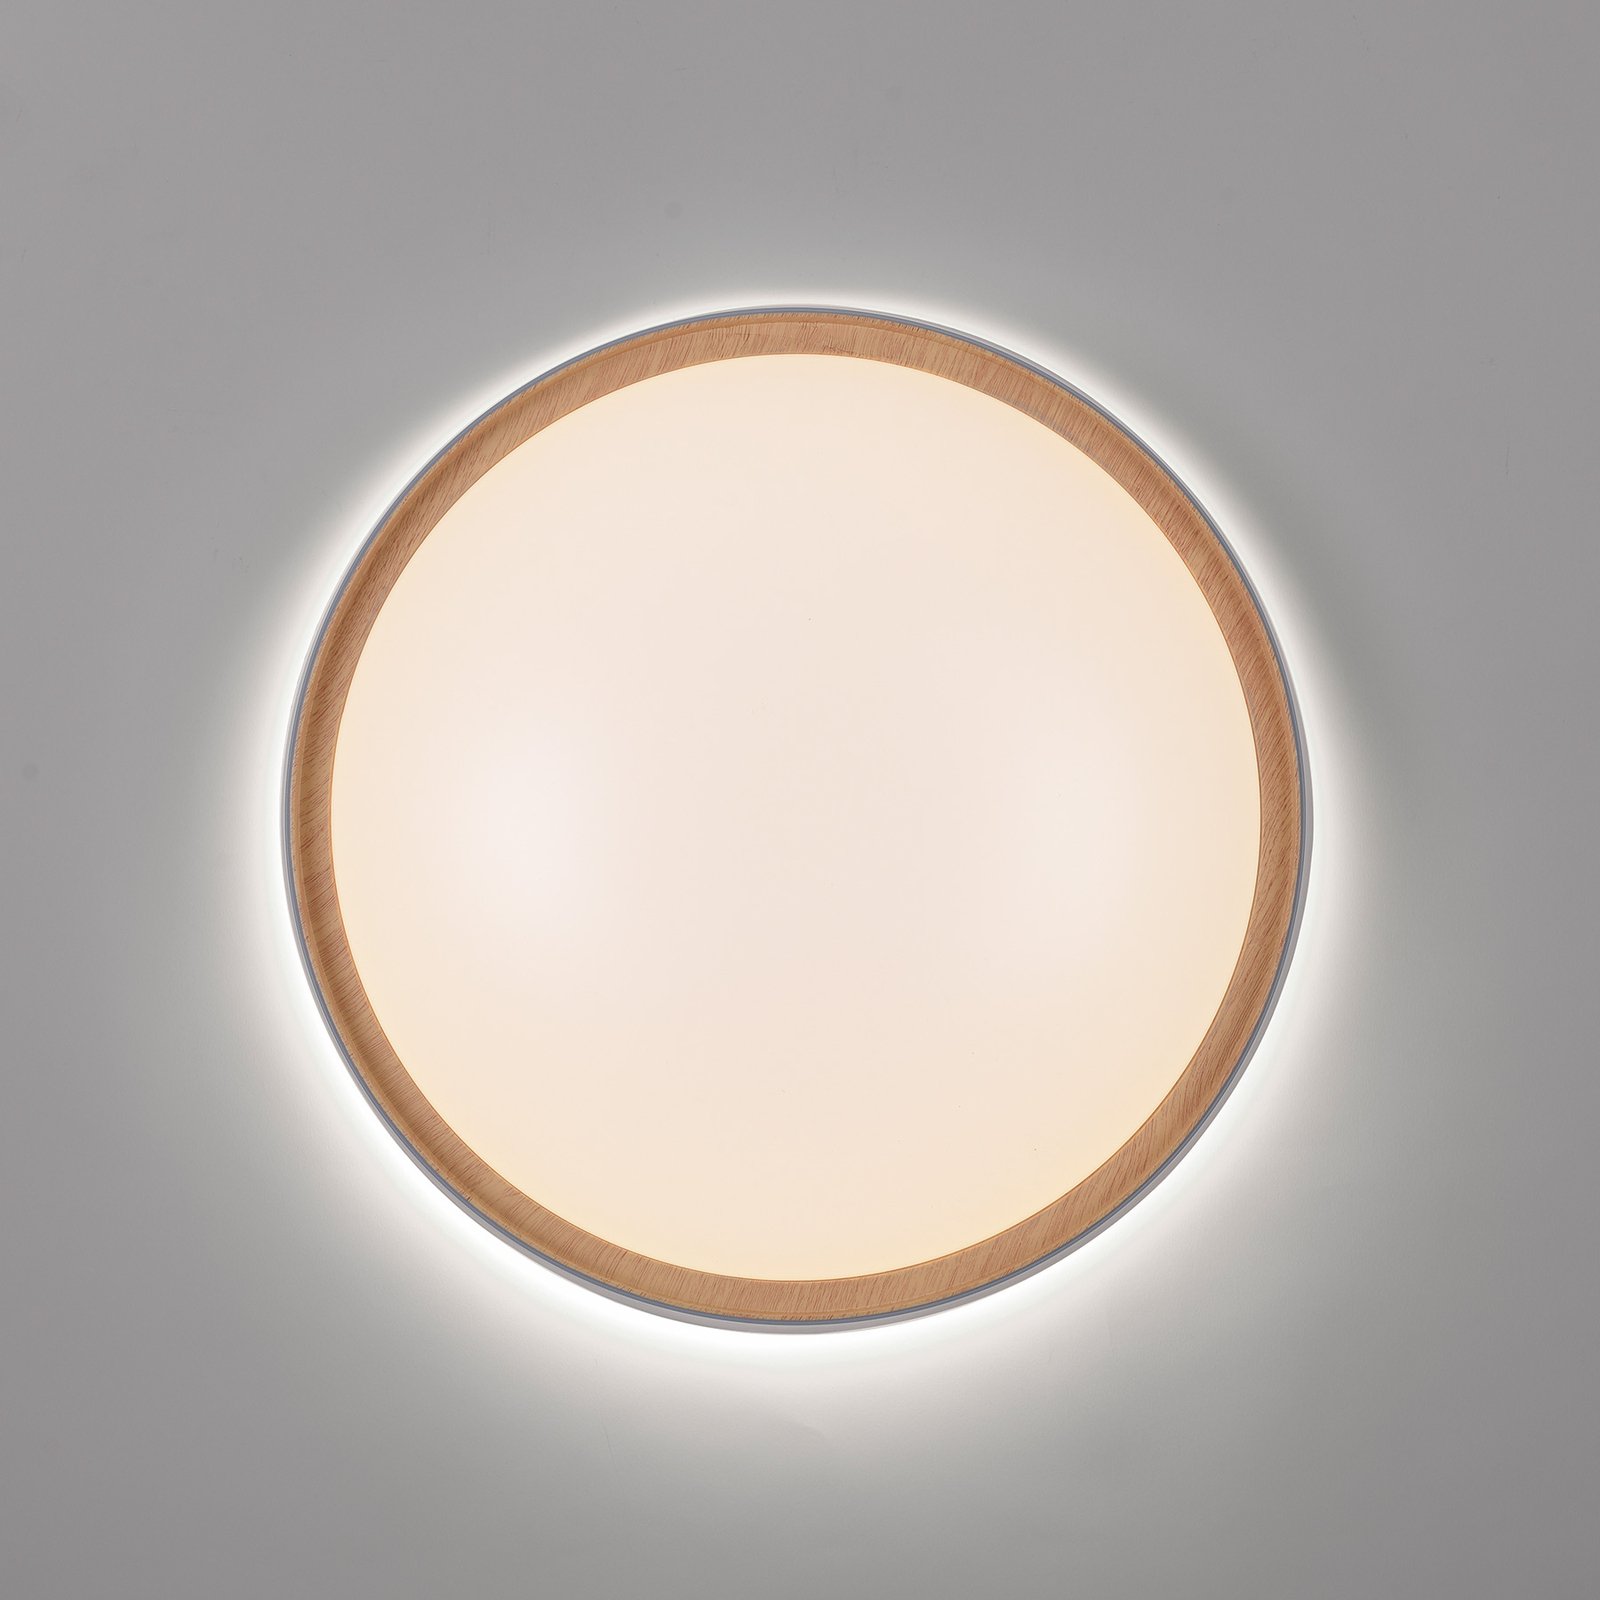 Paul Neuhaus Q-EMILIA sufitowa LED, szara/drewno